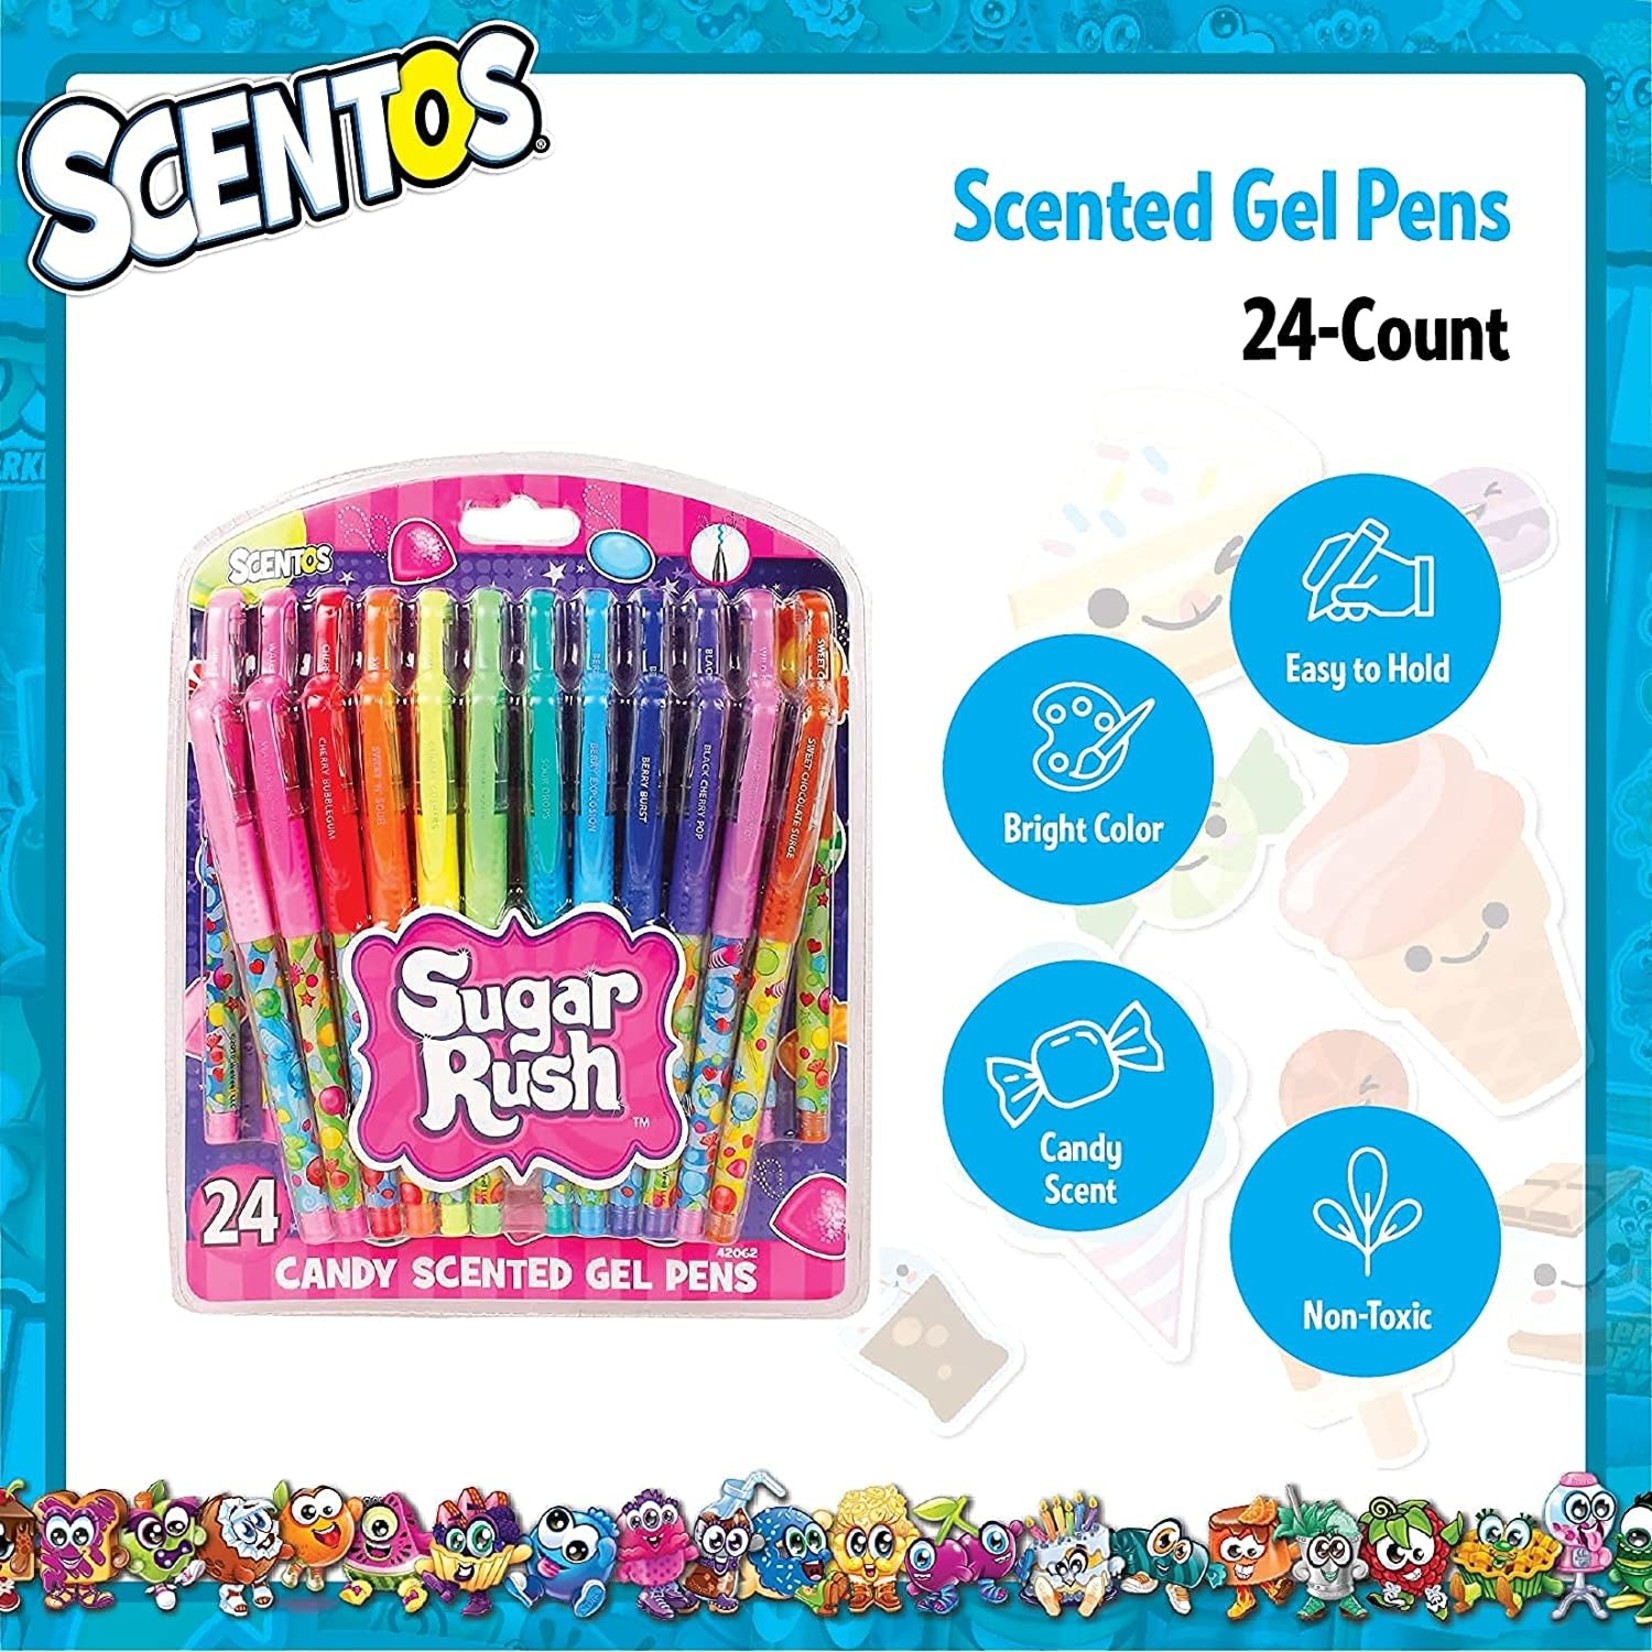 Scentos Scented Sugar Rush Gel Pens - 24PK